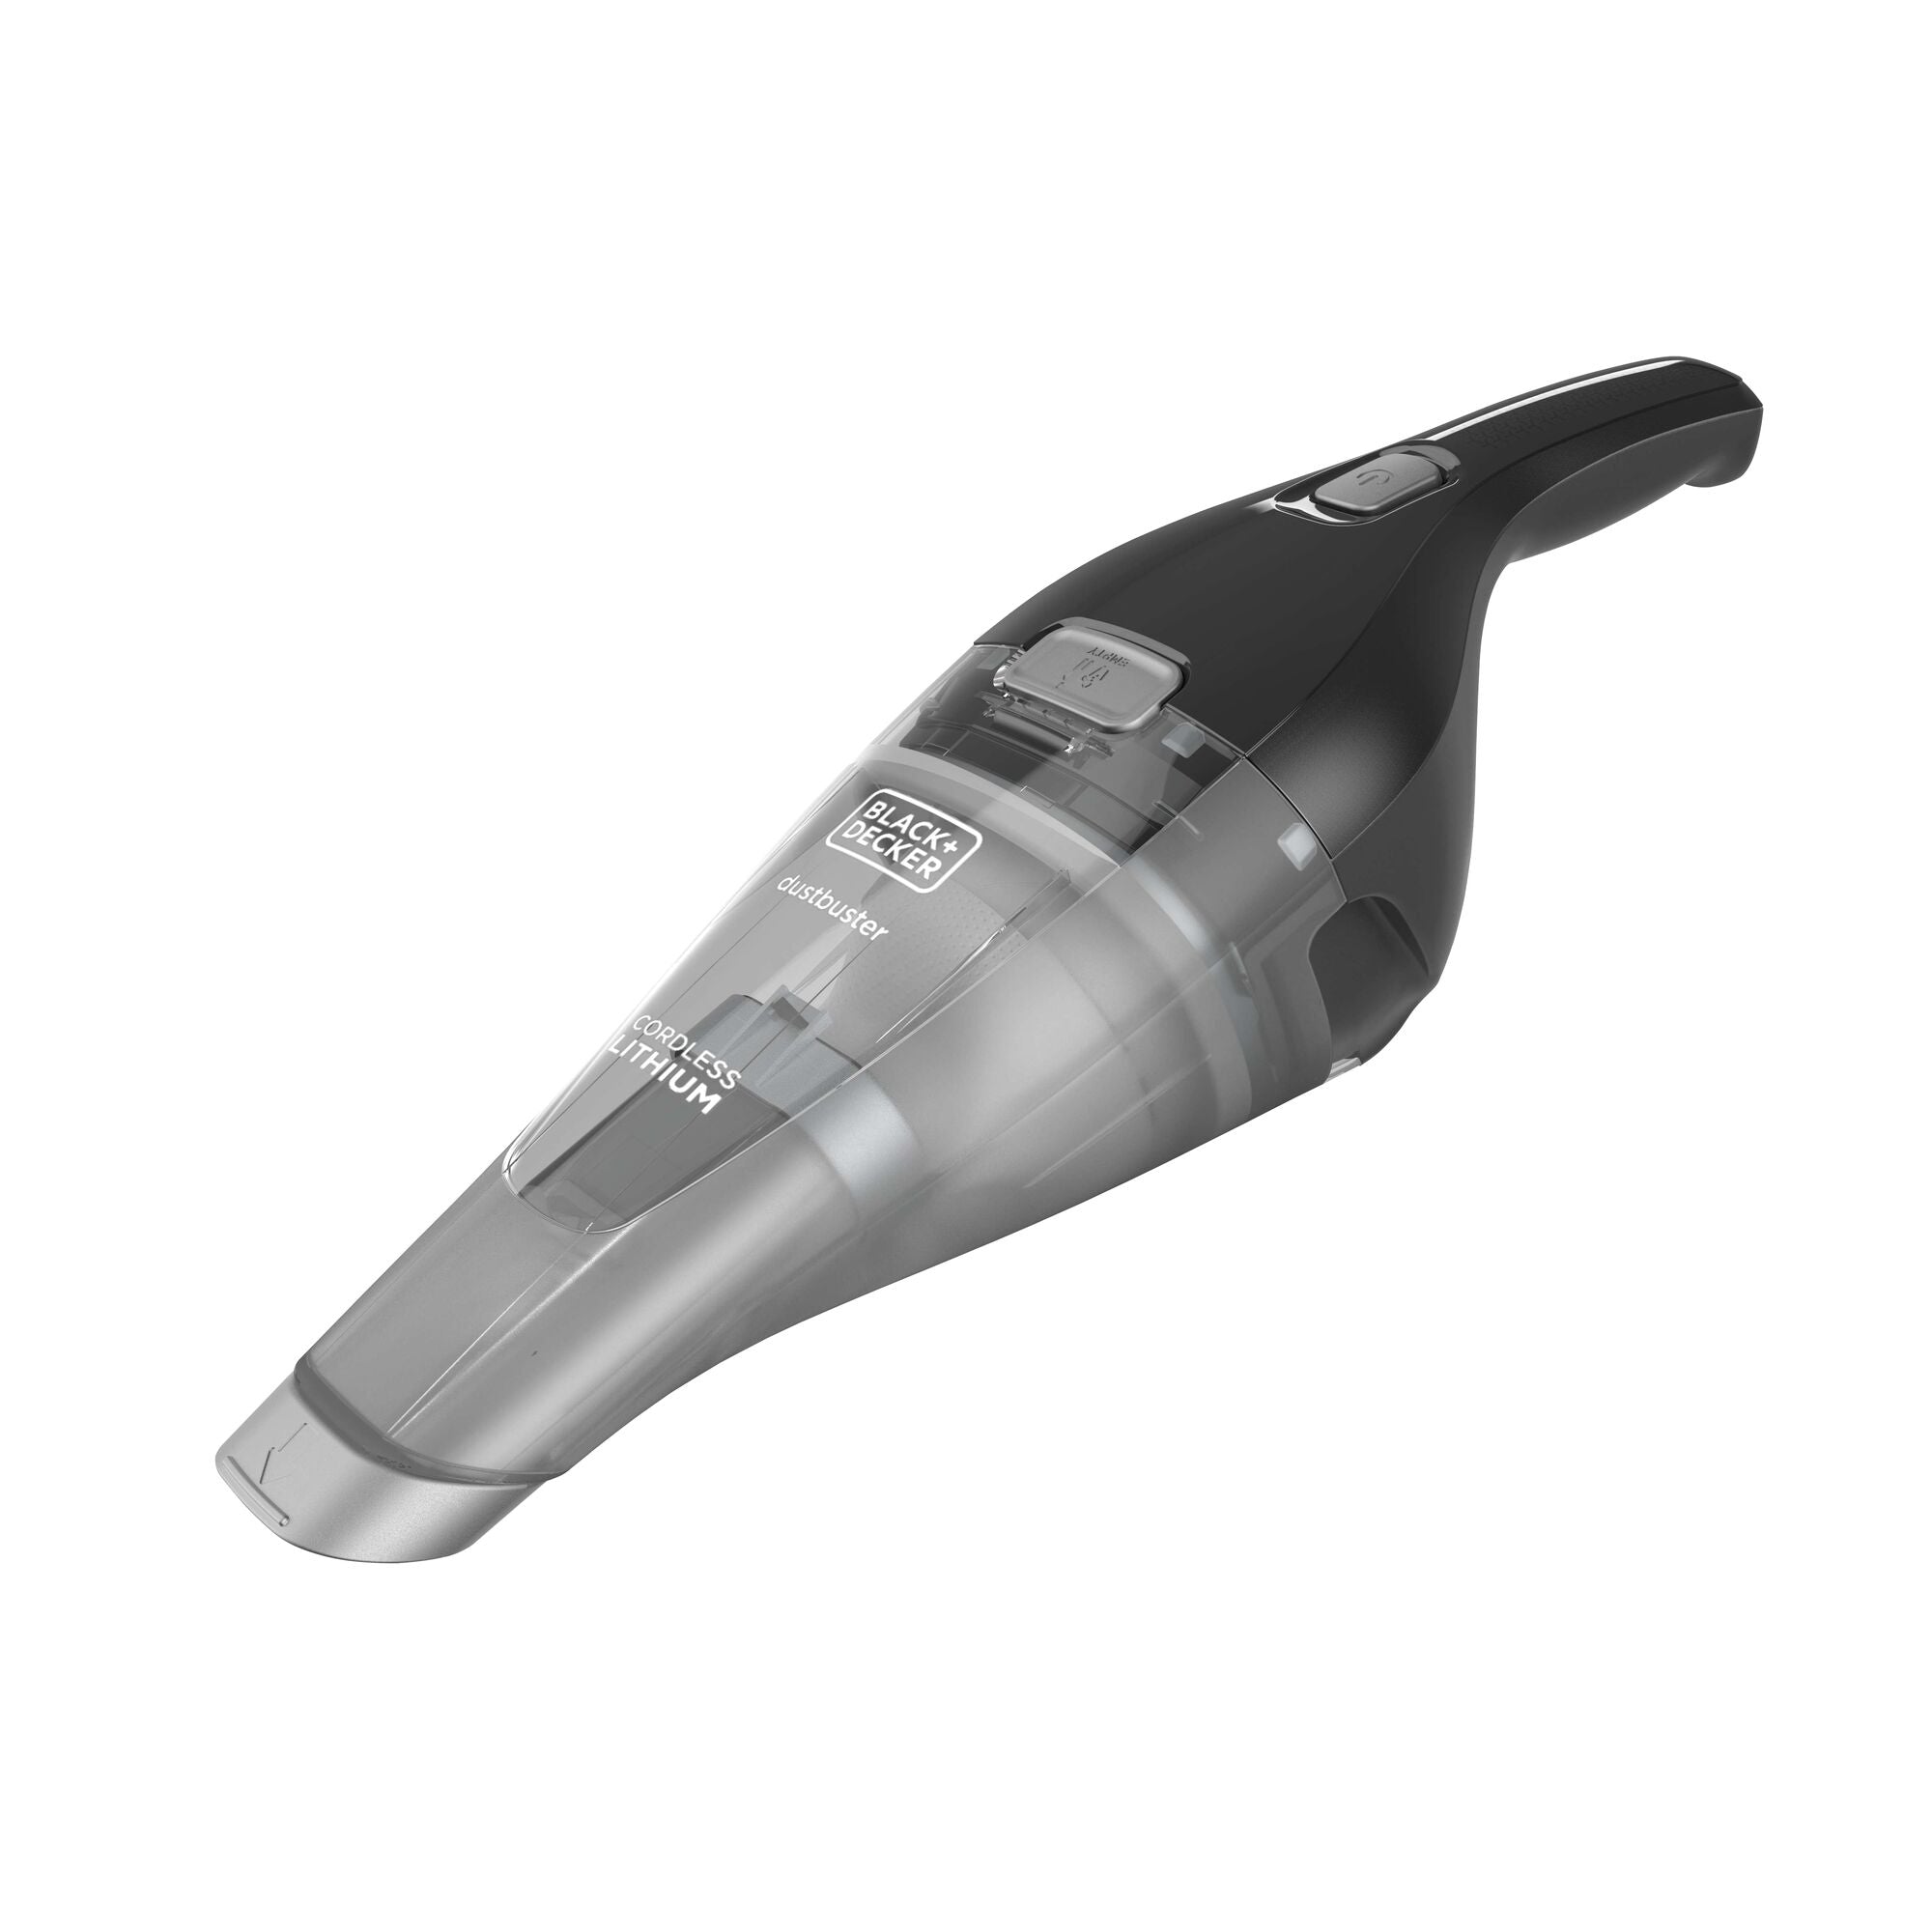 dustbuster® 7.2V MAX* 2.0Ah Cordless Hand Vacuum- Black | BLACK+DECKER